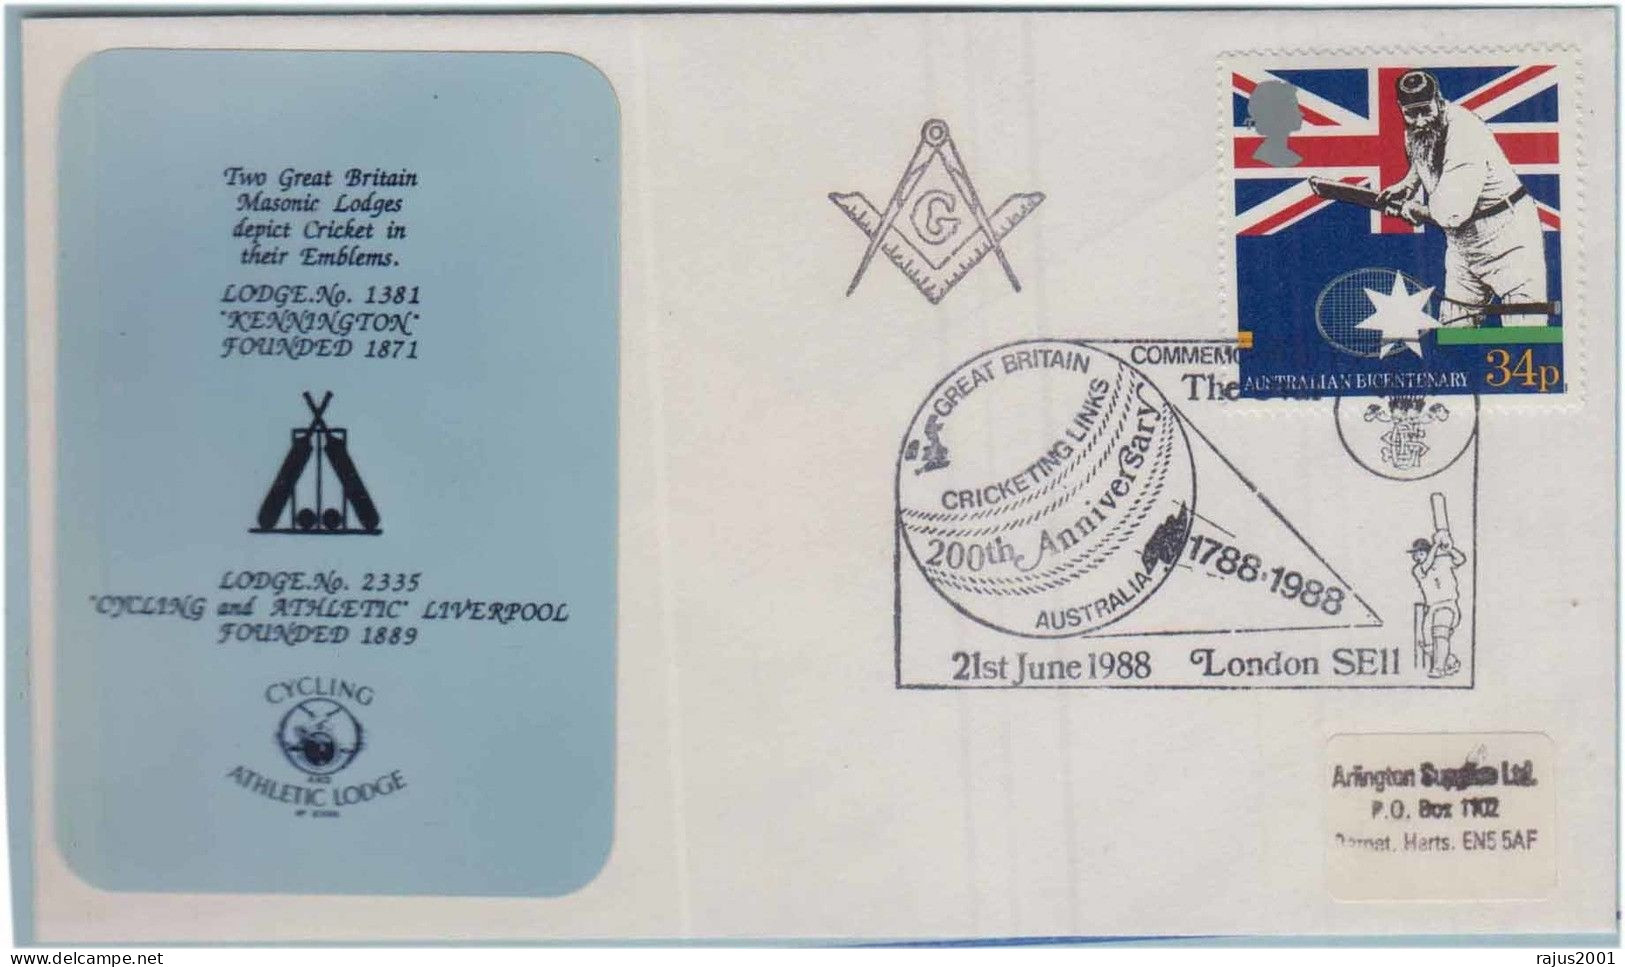 Kennington Lodge No 1381, Cycling And Athletic Lodge No 2335, Cricket Match Ball Bat Freemasonry Masonic Britain Cover - Massoneria